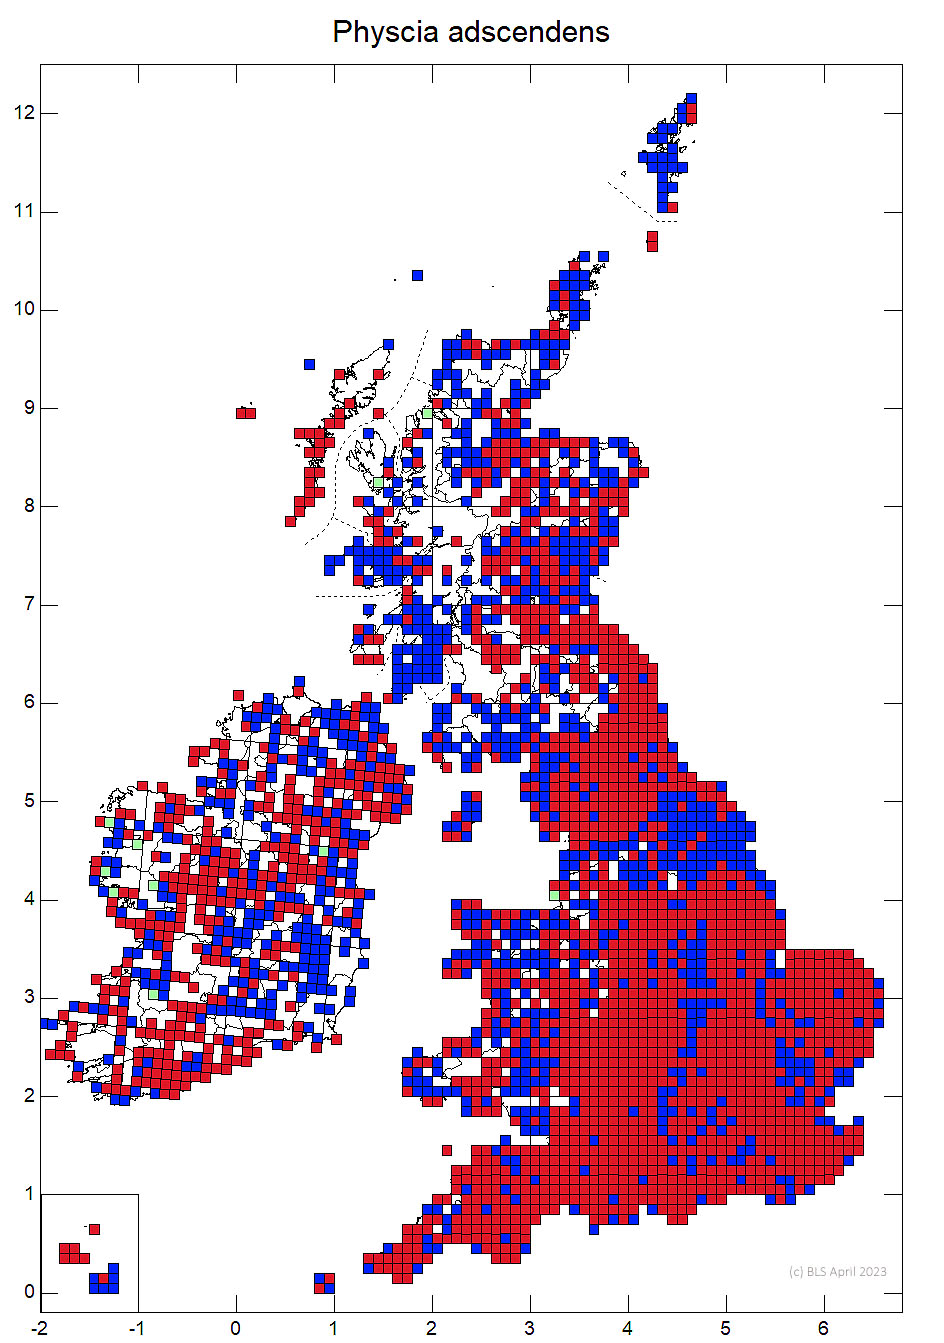 Physcia adscendens 10km sq distribution map